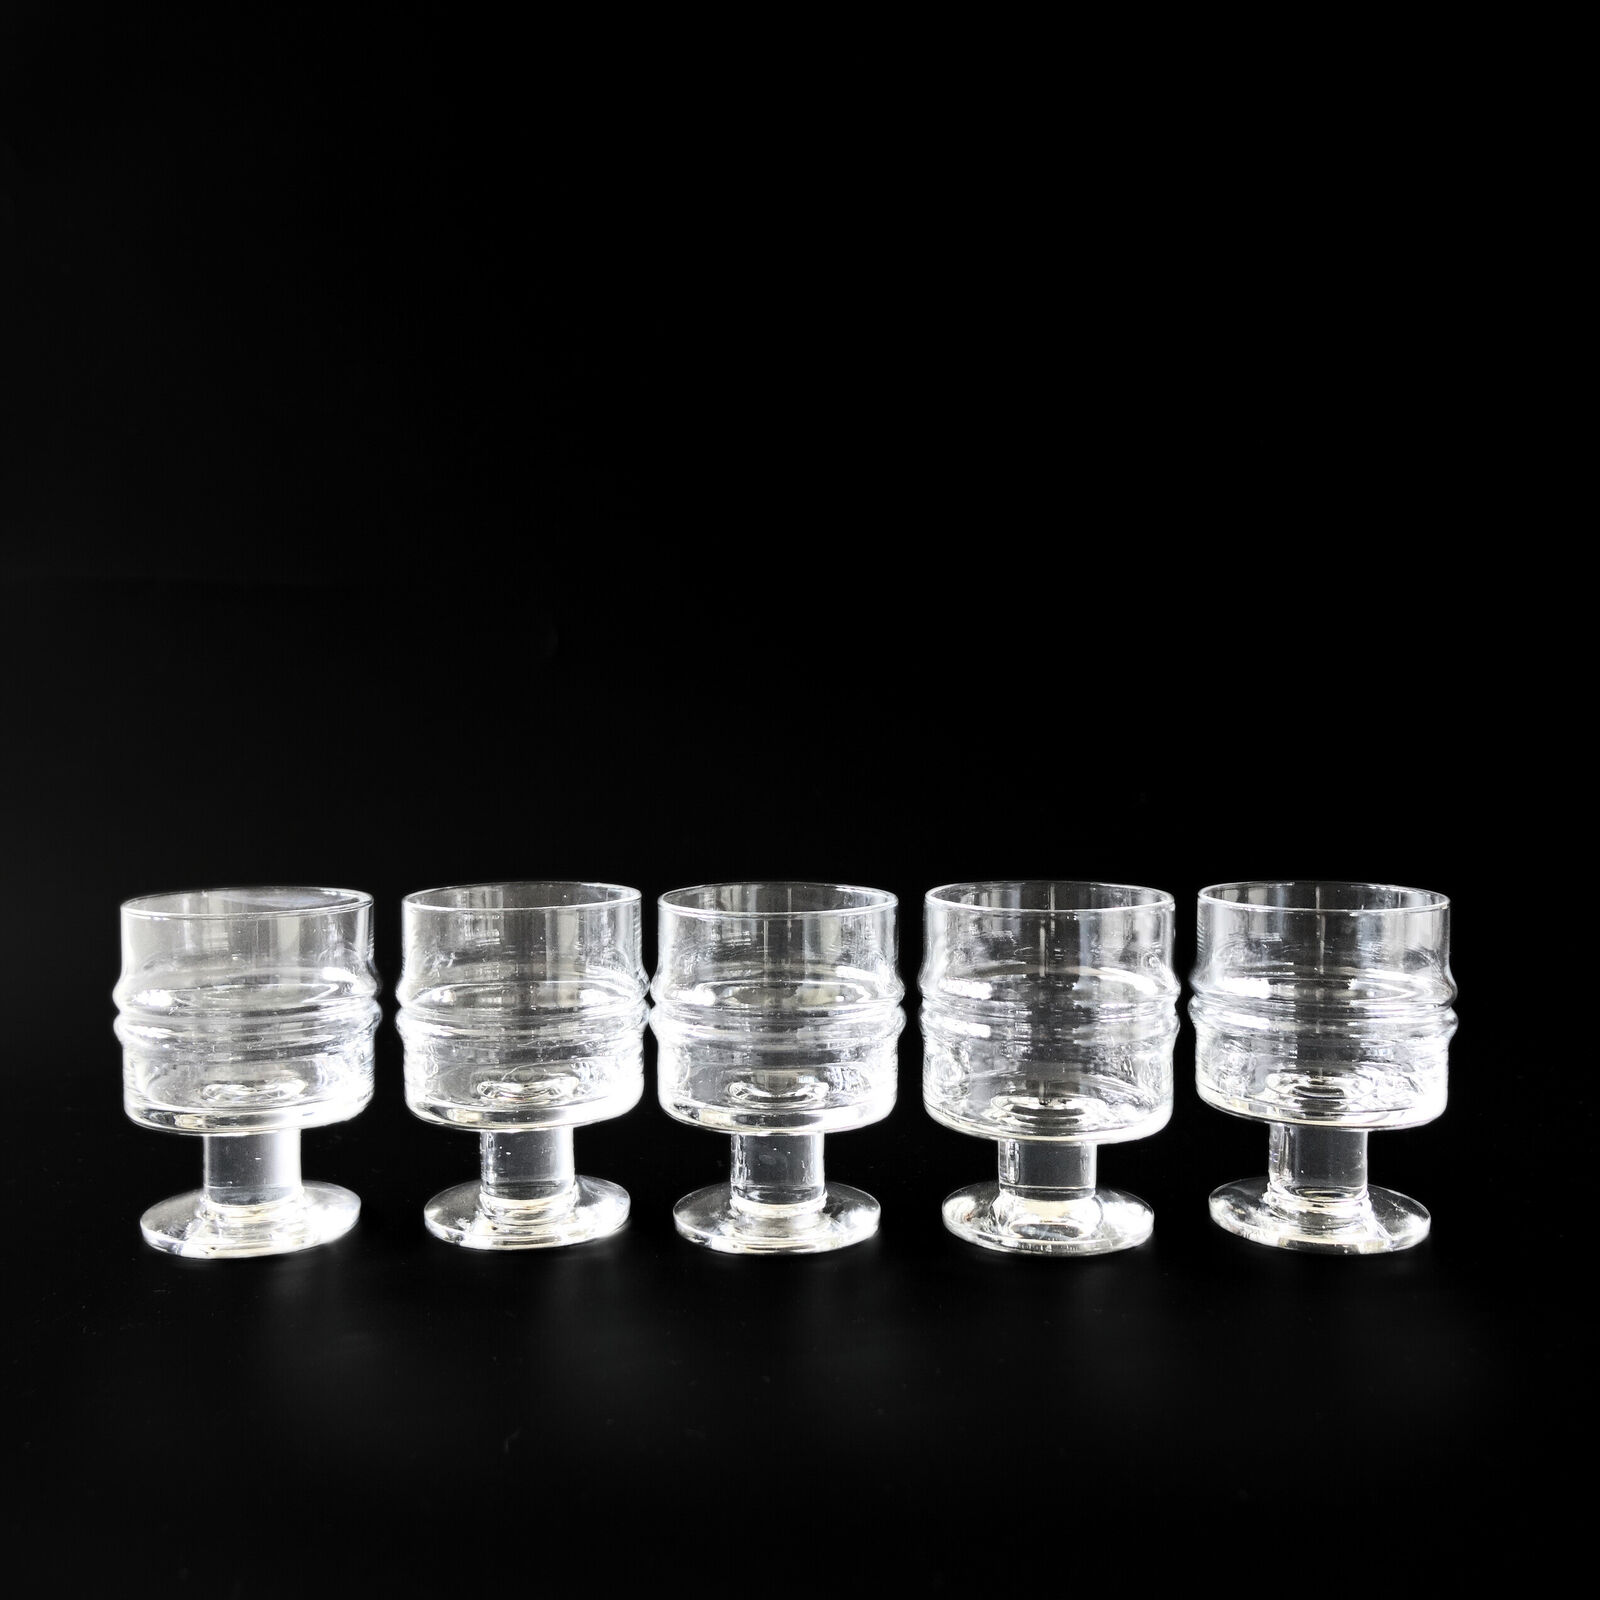 Retro Iittala small glasses "Droppring" designed by Timo Sarpaneva from Finland